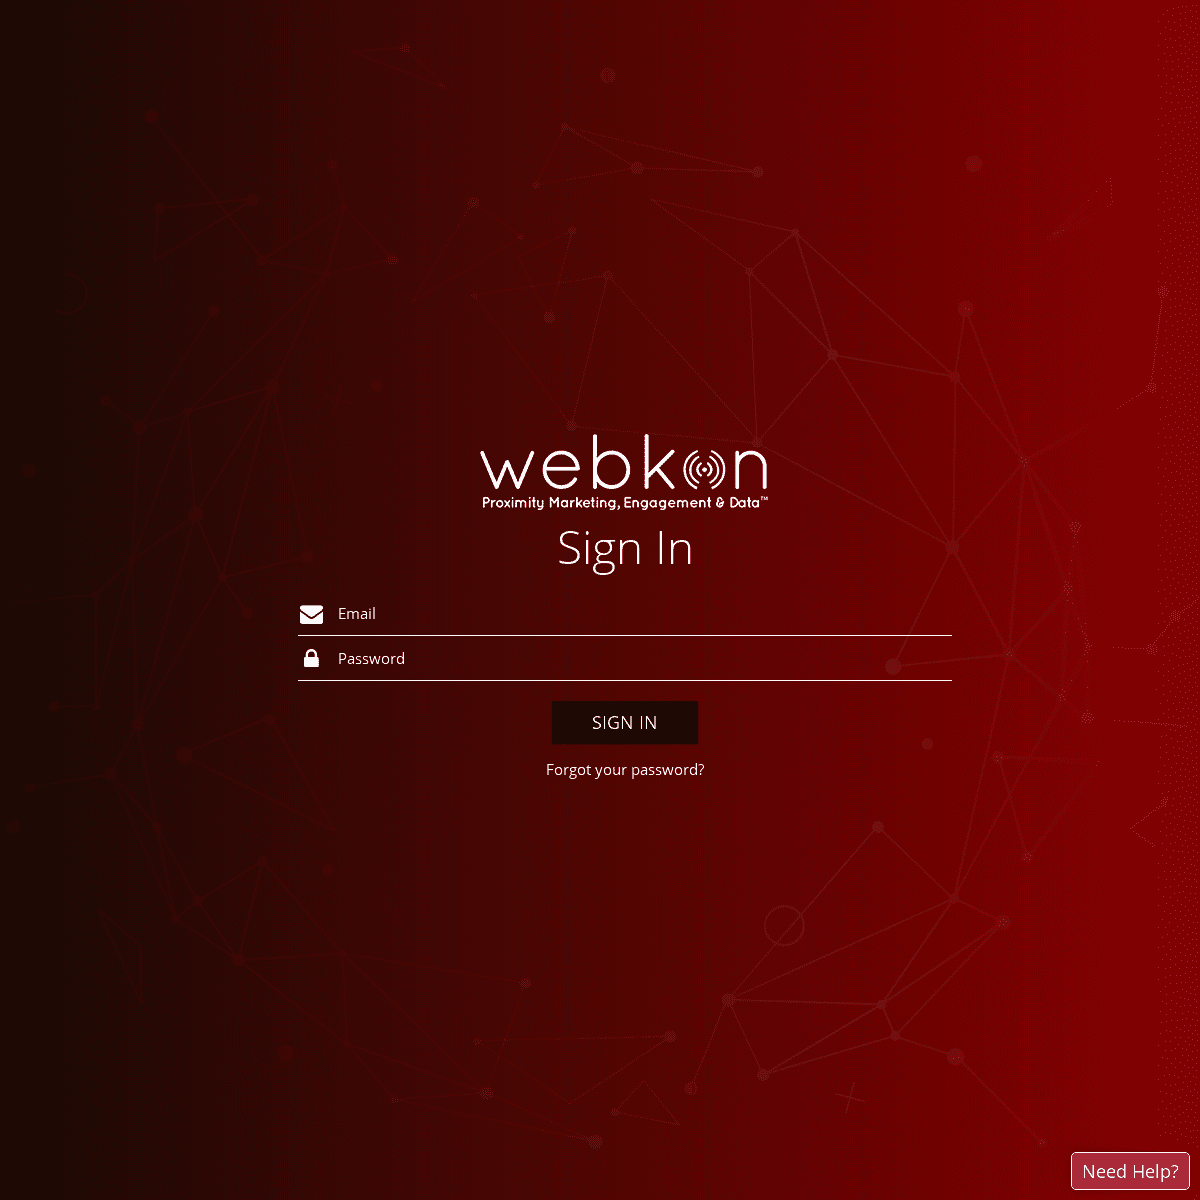 A complete backup of webkon.biz